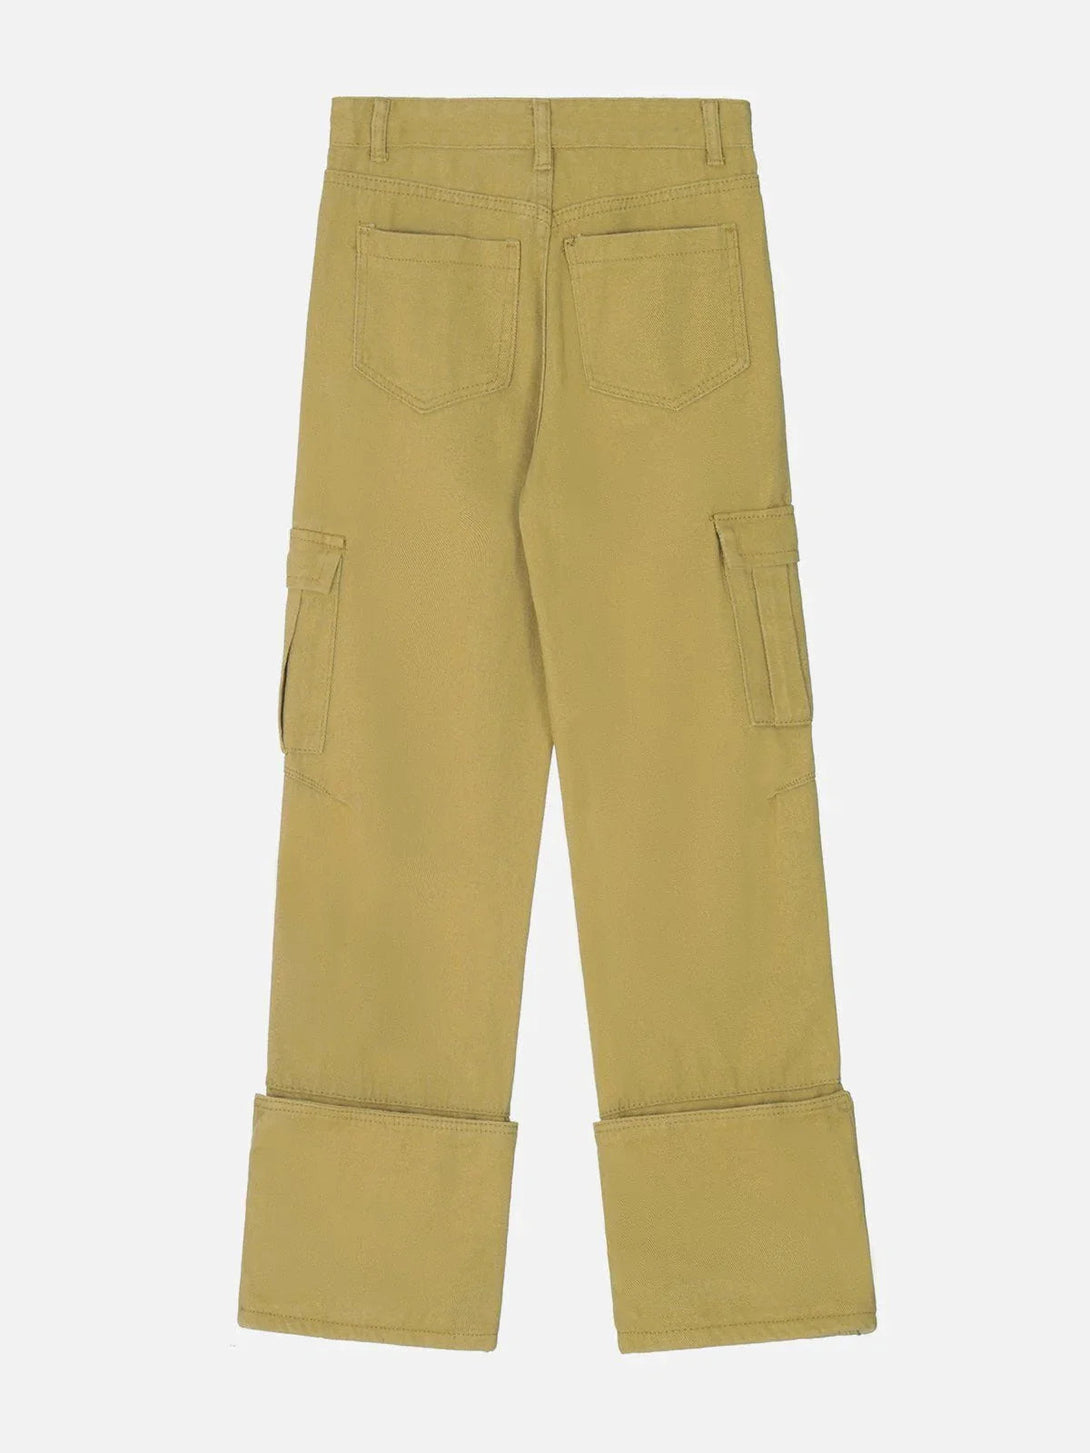 Majesda® - Multi-Pocket Zip Pants outfit ideas streetwear fashion